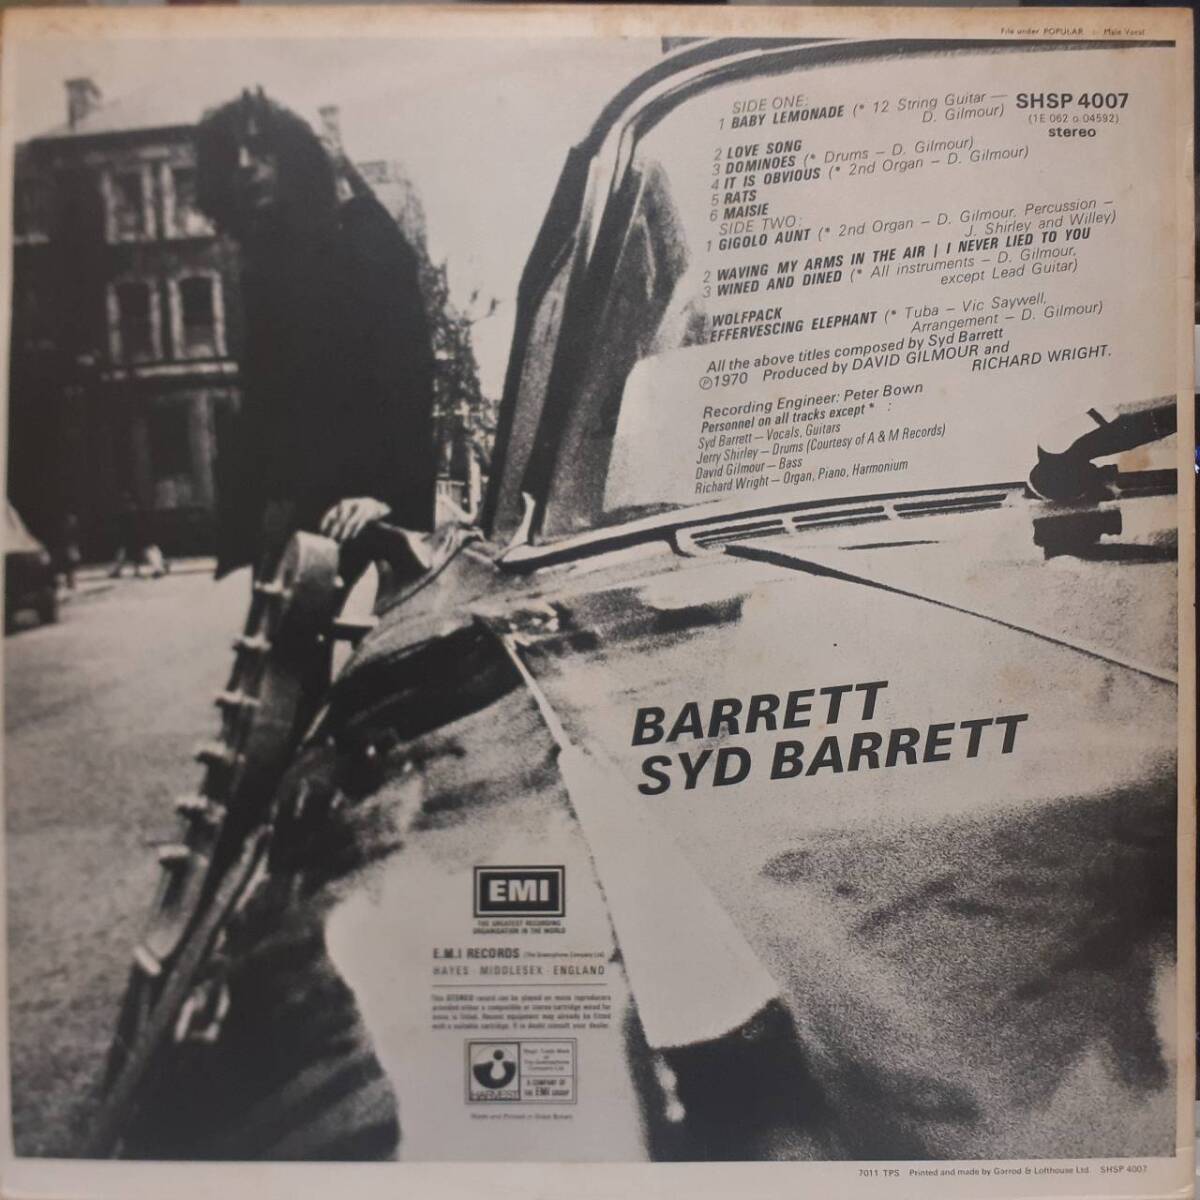  britain HARVEST record LPmato branch A-1G!Syd Barrett / Barrett 1970 period the first period record SHSP 4007 tech s tea -JKTsido*ba let that name is ba let Pink Floyd